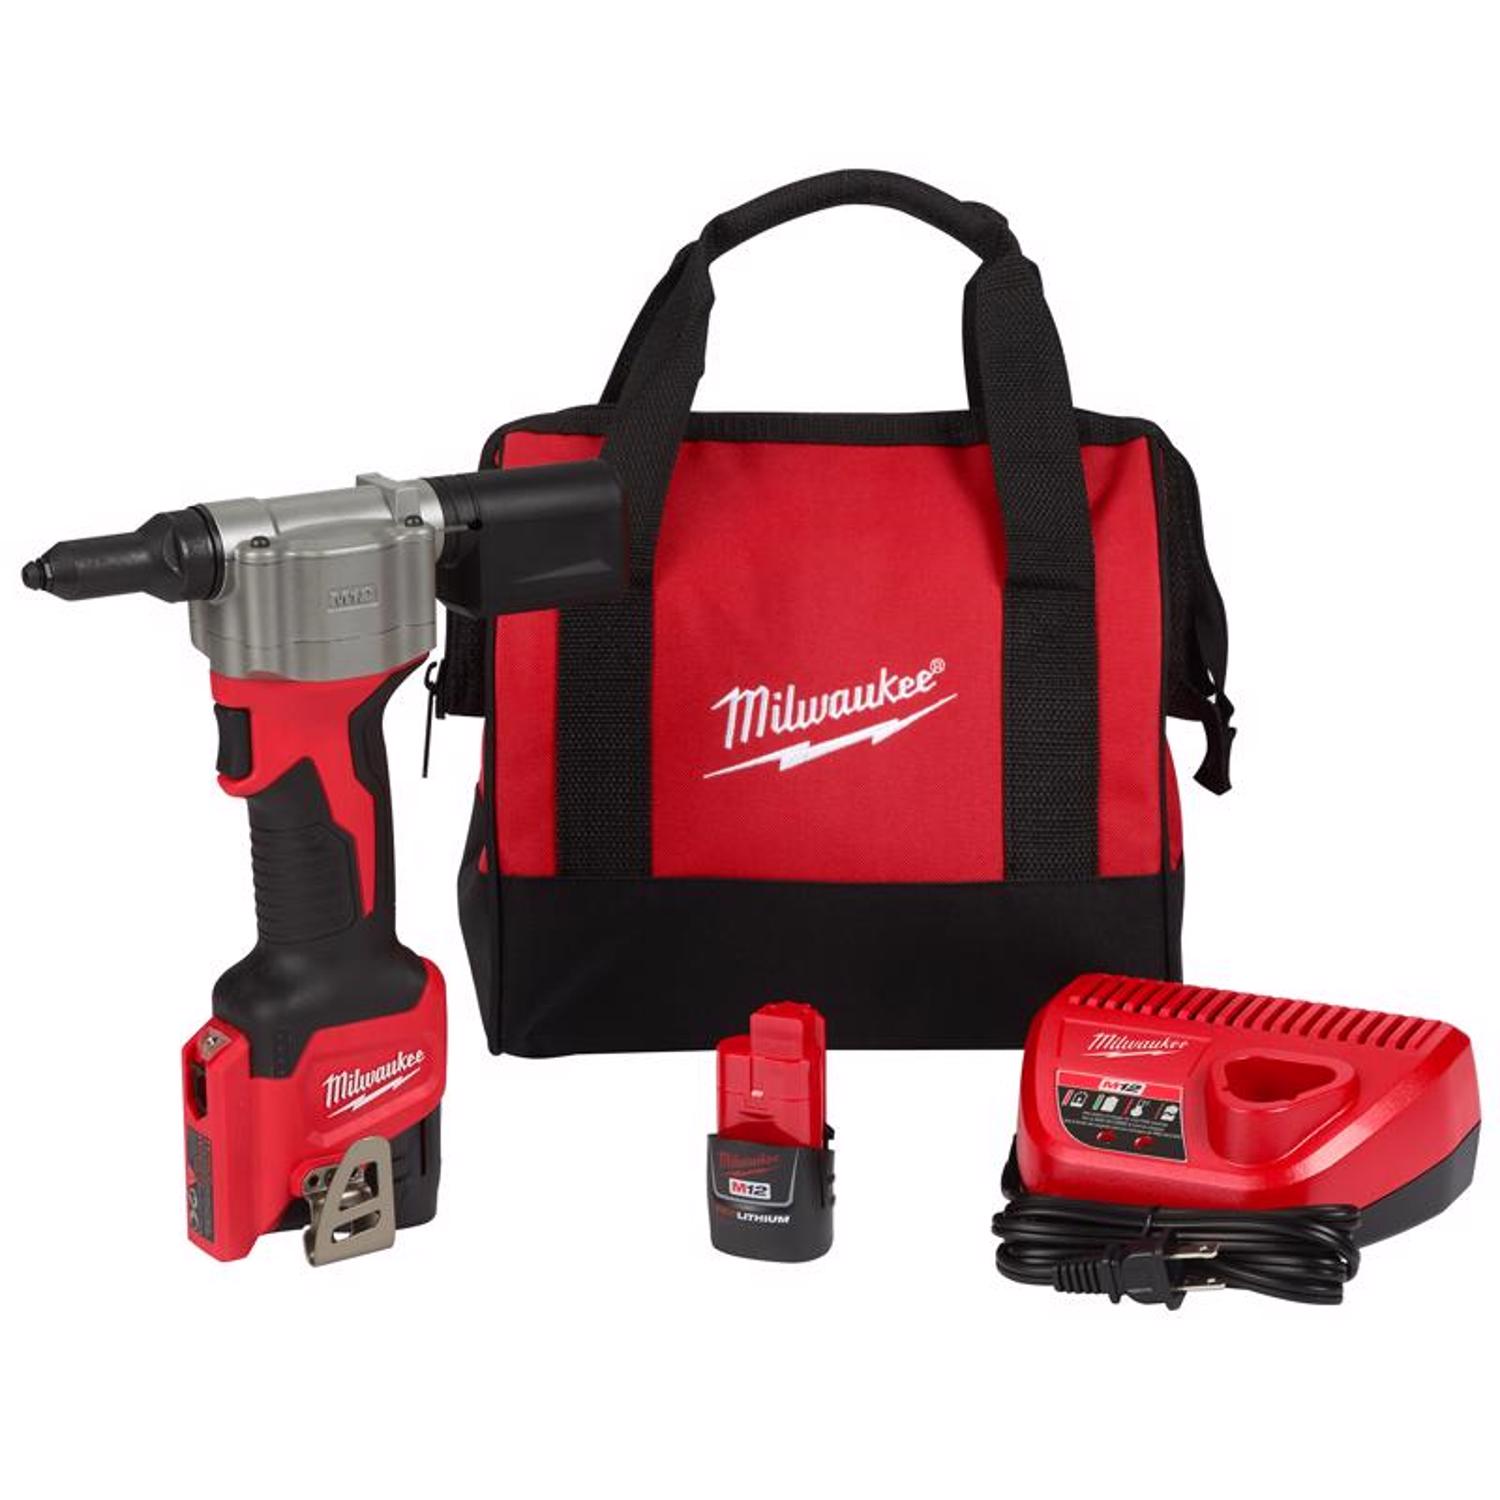 Photos - Paint Sprayer Milwaukee M12 Stainless Steel Rivet Tool Kit Black/Red 3 pc 2550-22 